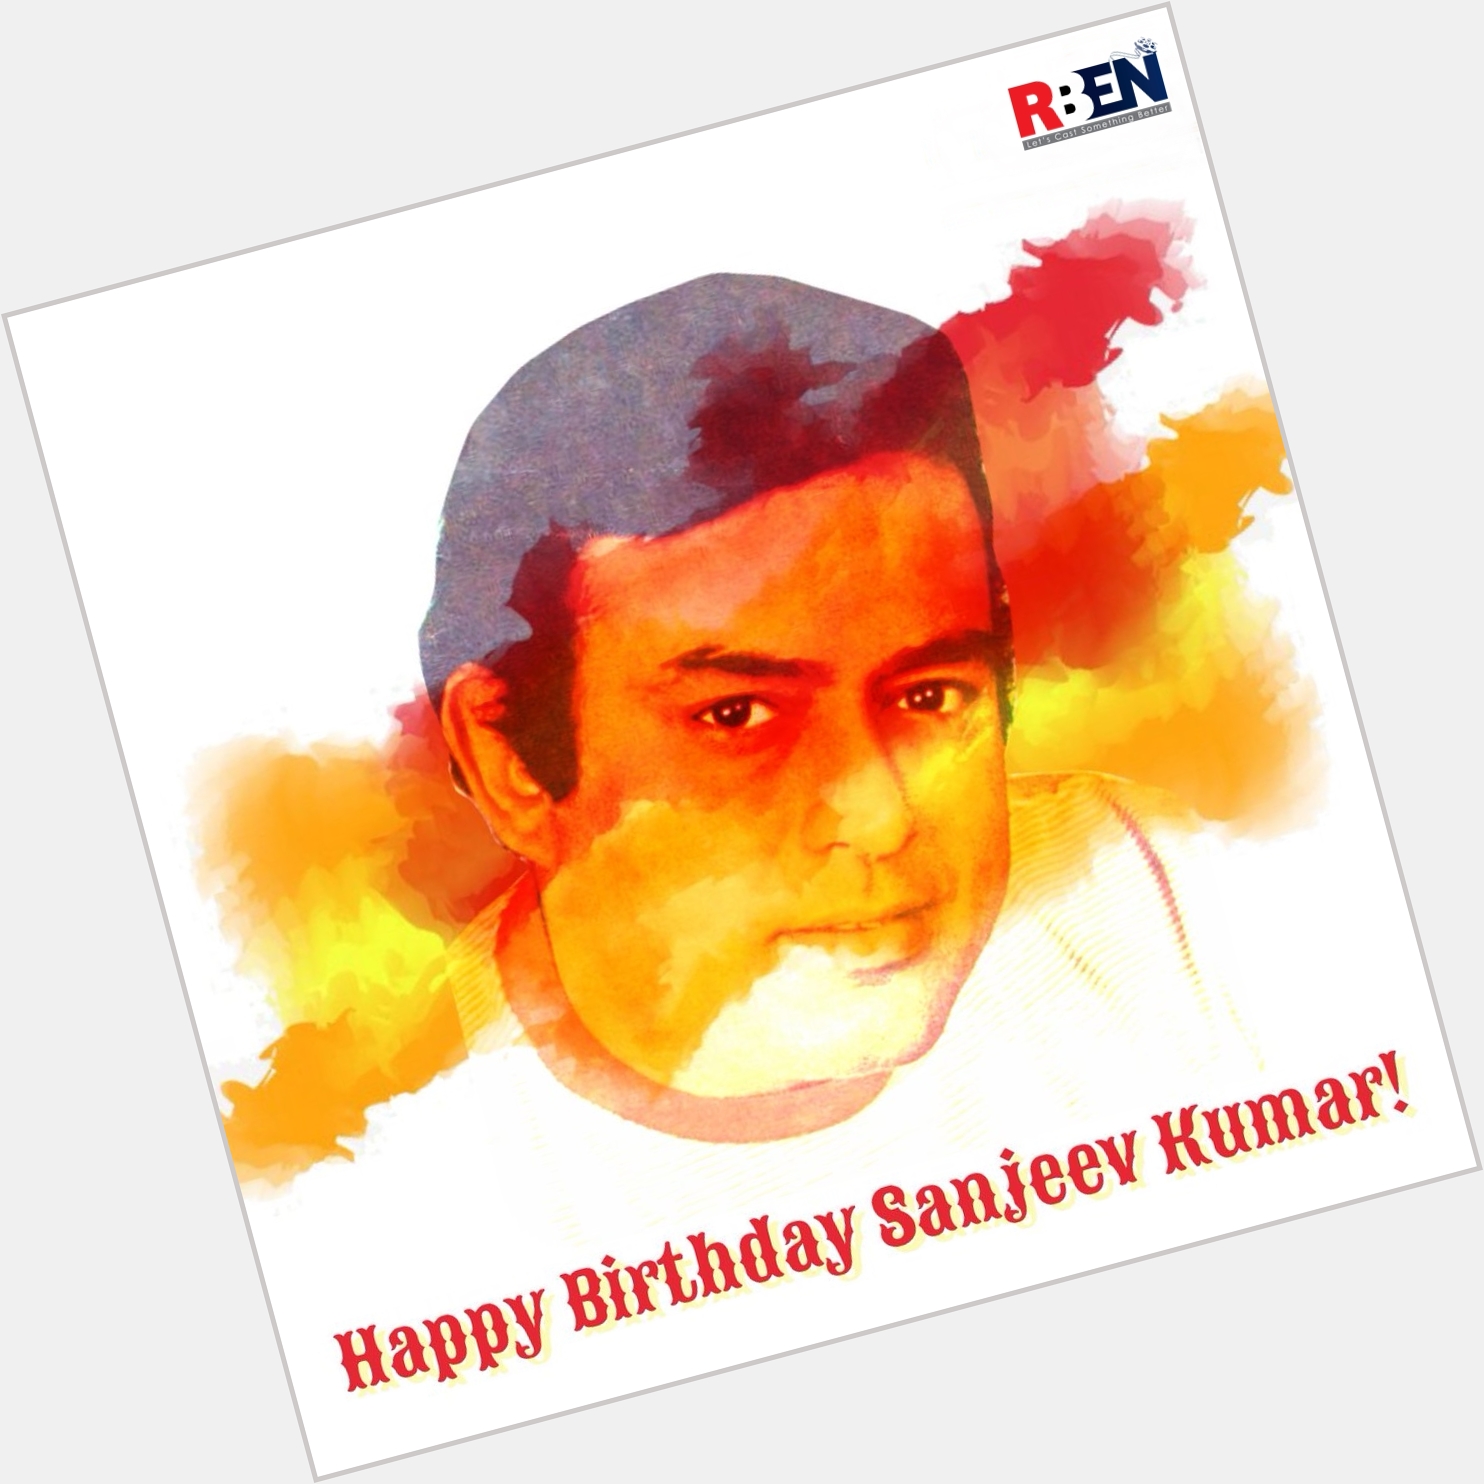 Happy Birthday Sanjeev Kumar!!! 